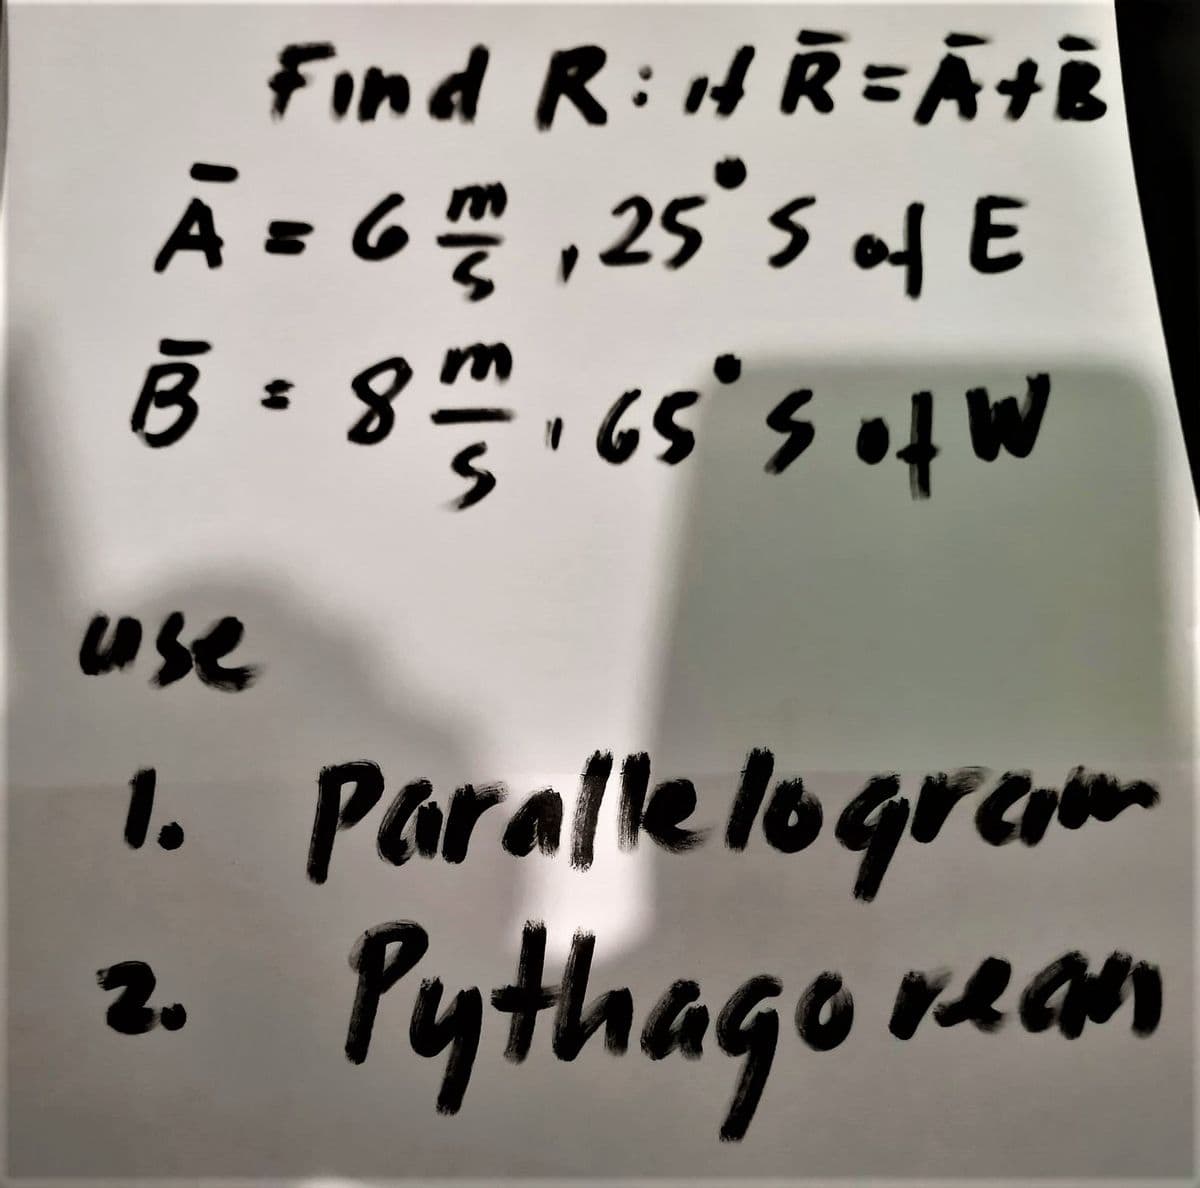 Find R:H R=ĀtĒ
A.6를 ,25°s 어E
65 S of
use
1. Paralle lograrten
Pythago rean
2.
